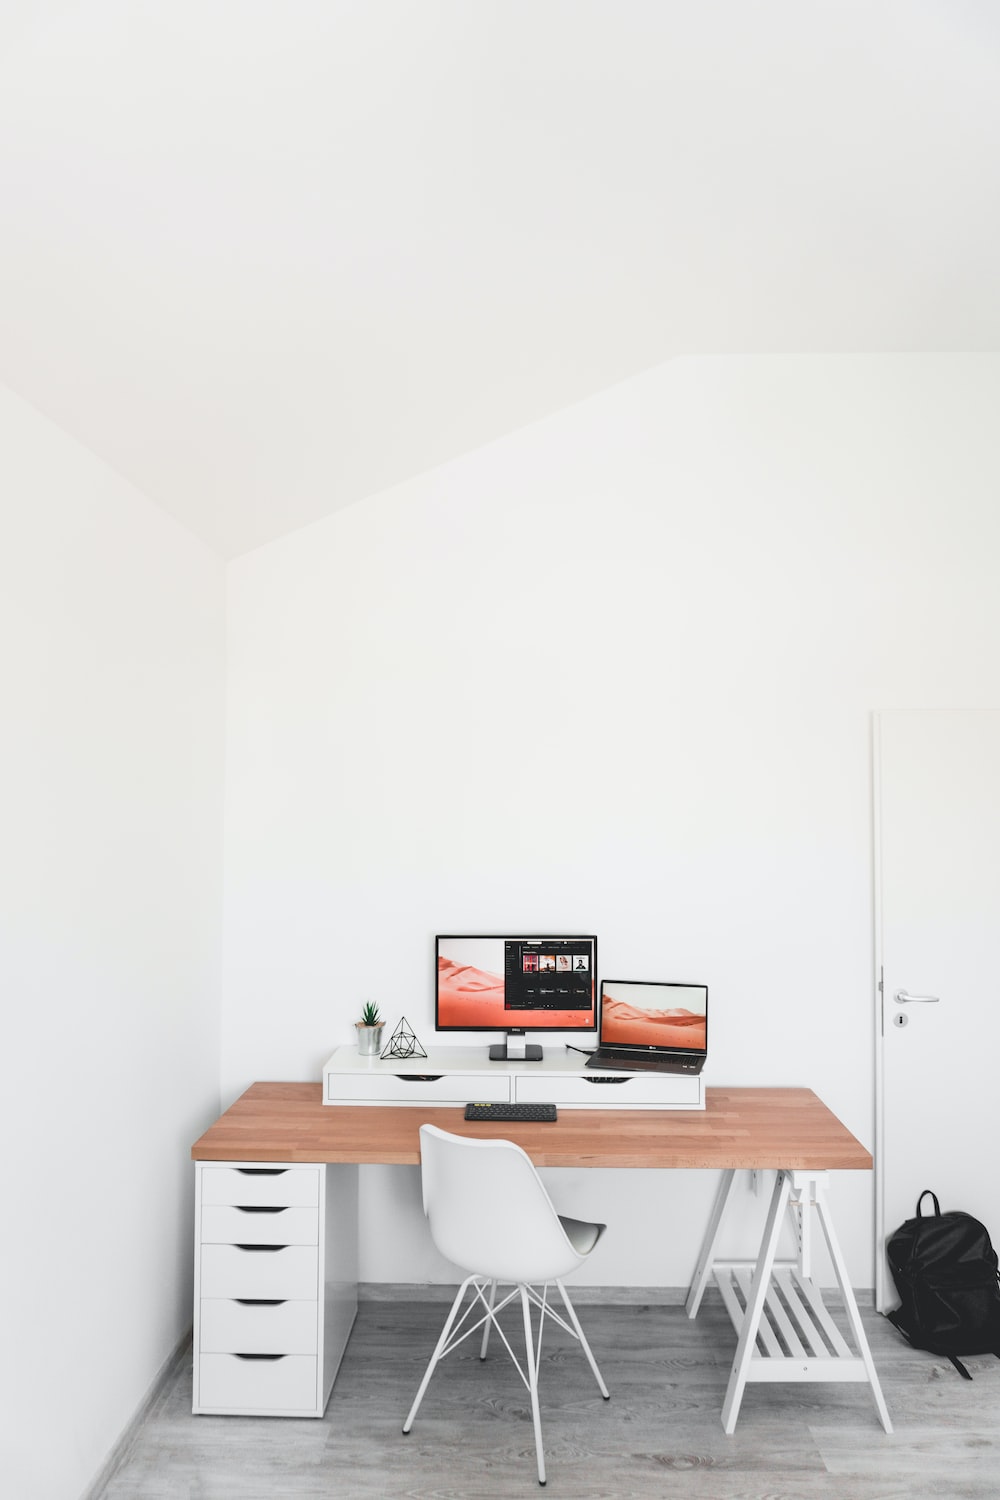 How do you set up an office desk?